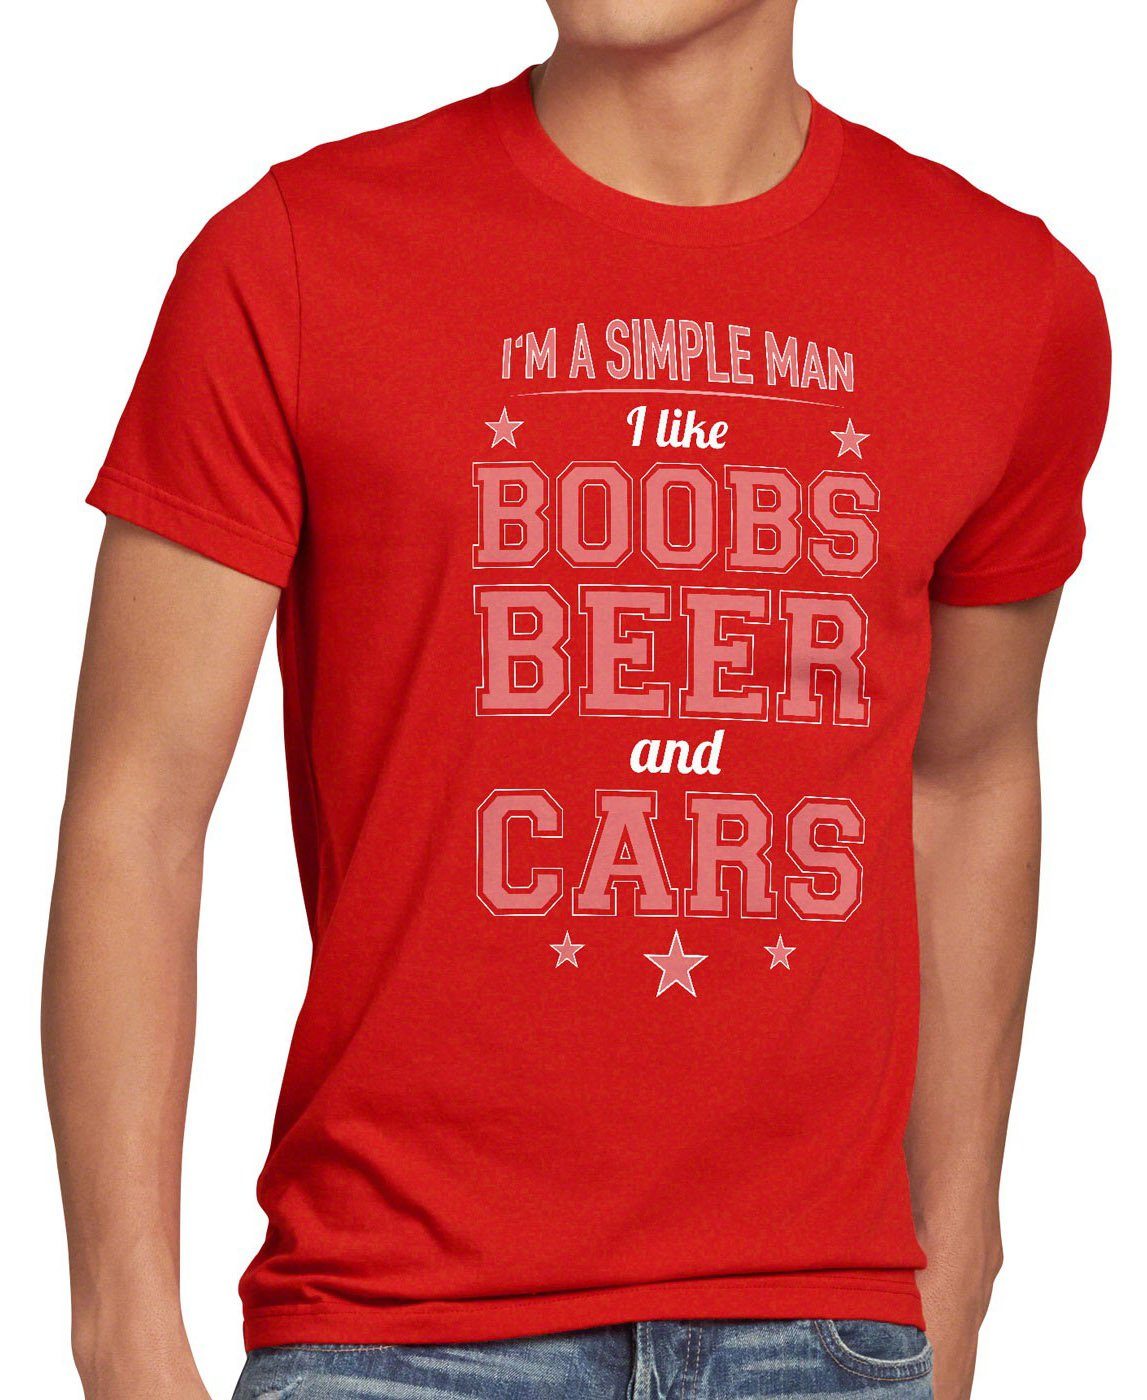 Simple titten Herren Man car auto tuning style3 beer boobs Print-Shirt bier funshirt rot T-Shirt spruch